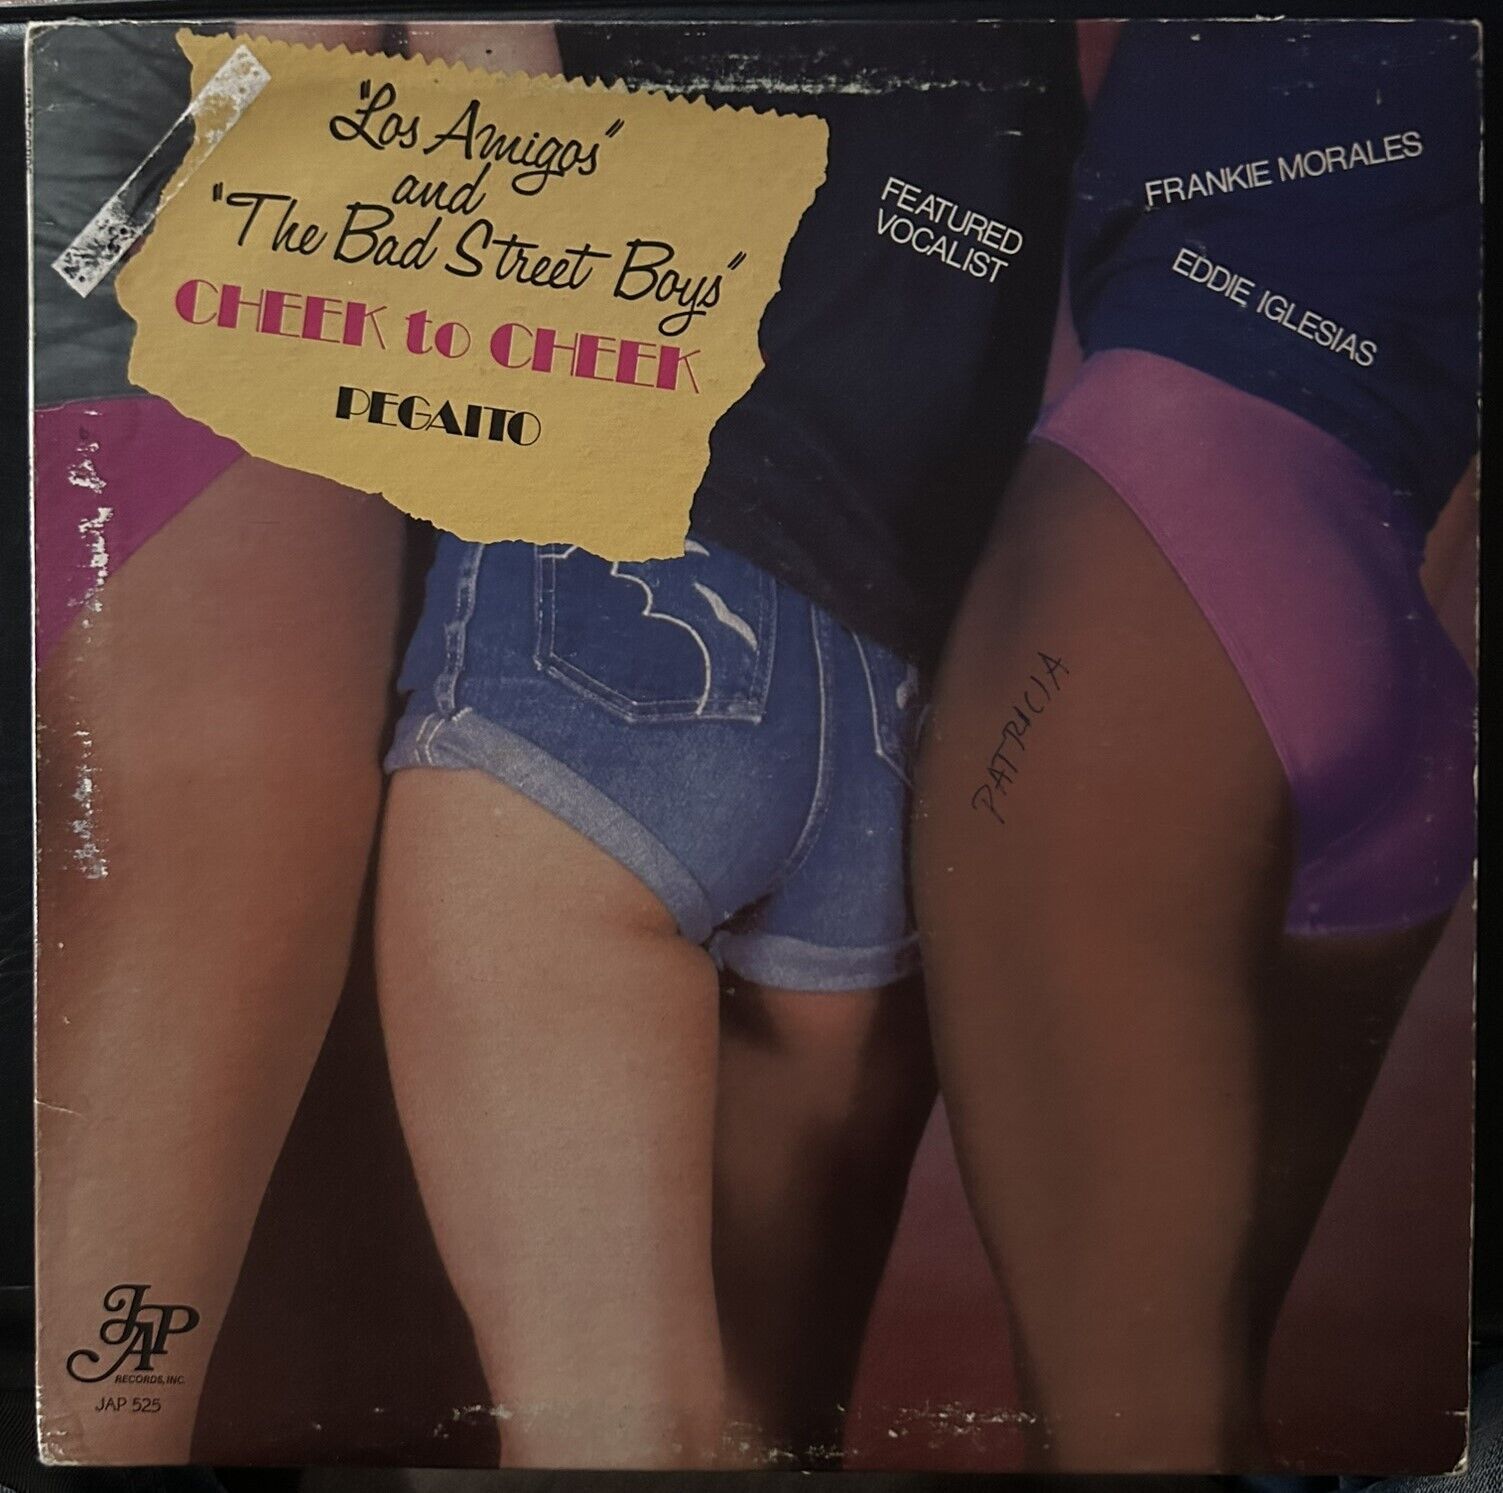 Los Amigos and The Bad Street Boys "Cheek To Cheek - Pegaito" Vinyl Record LP